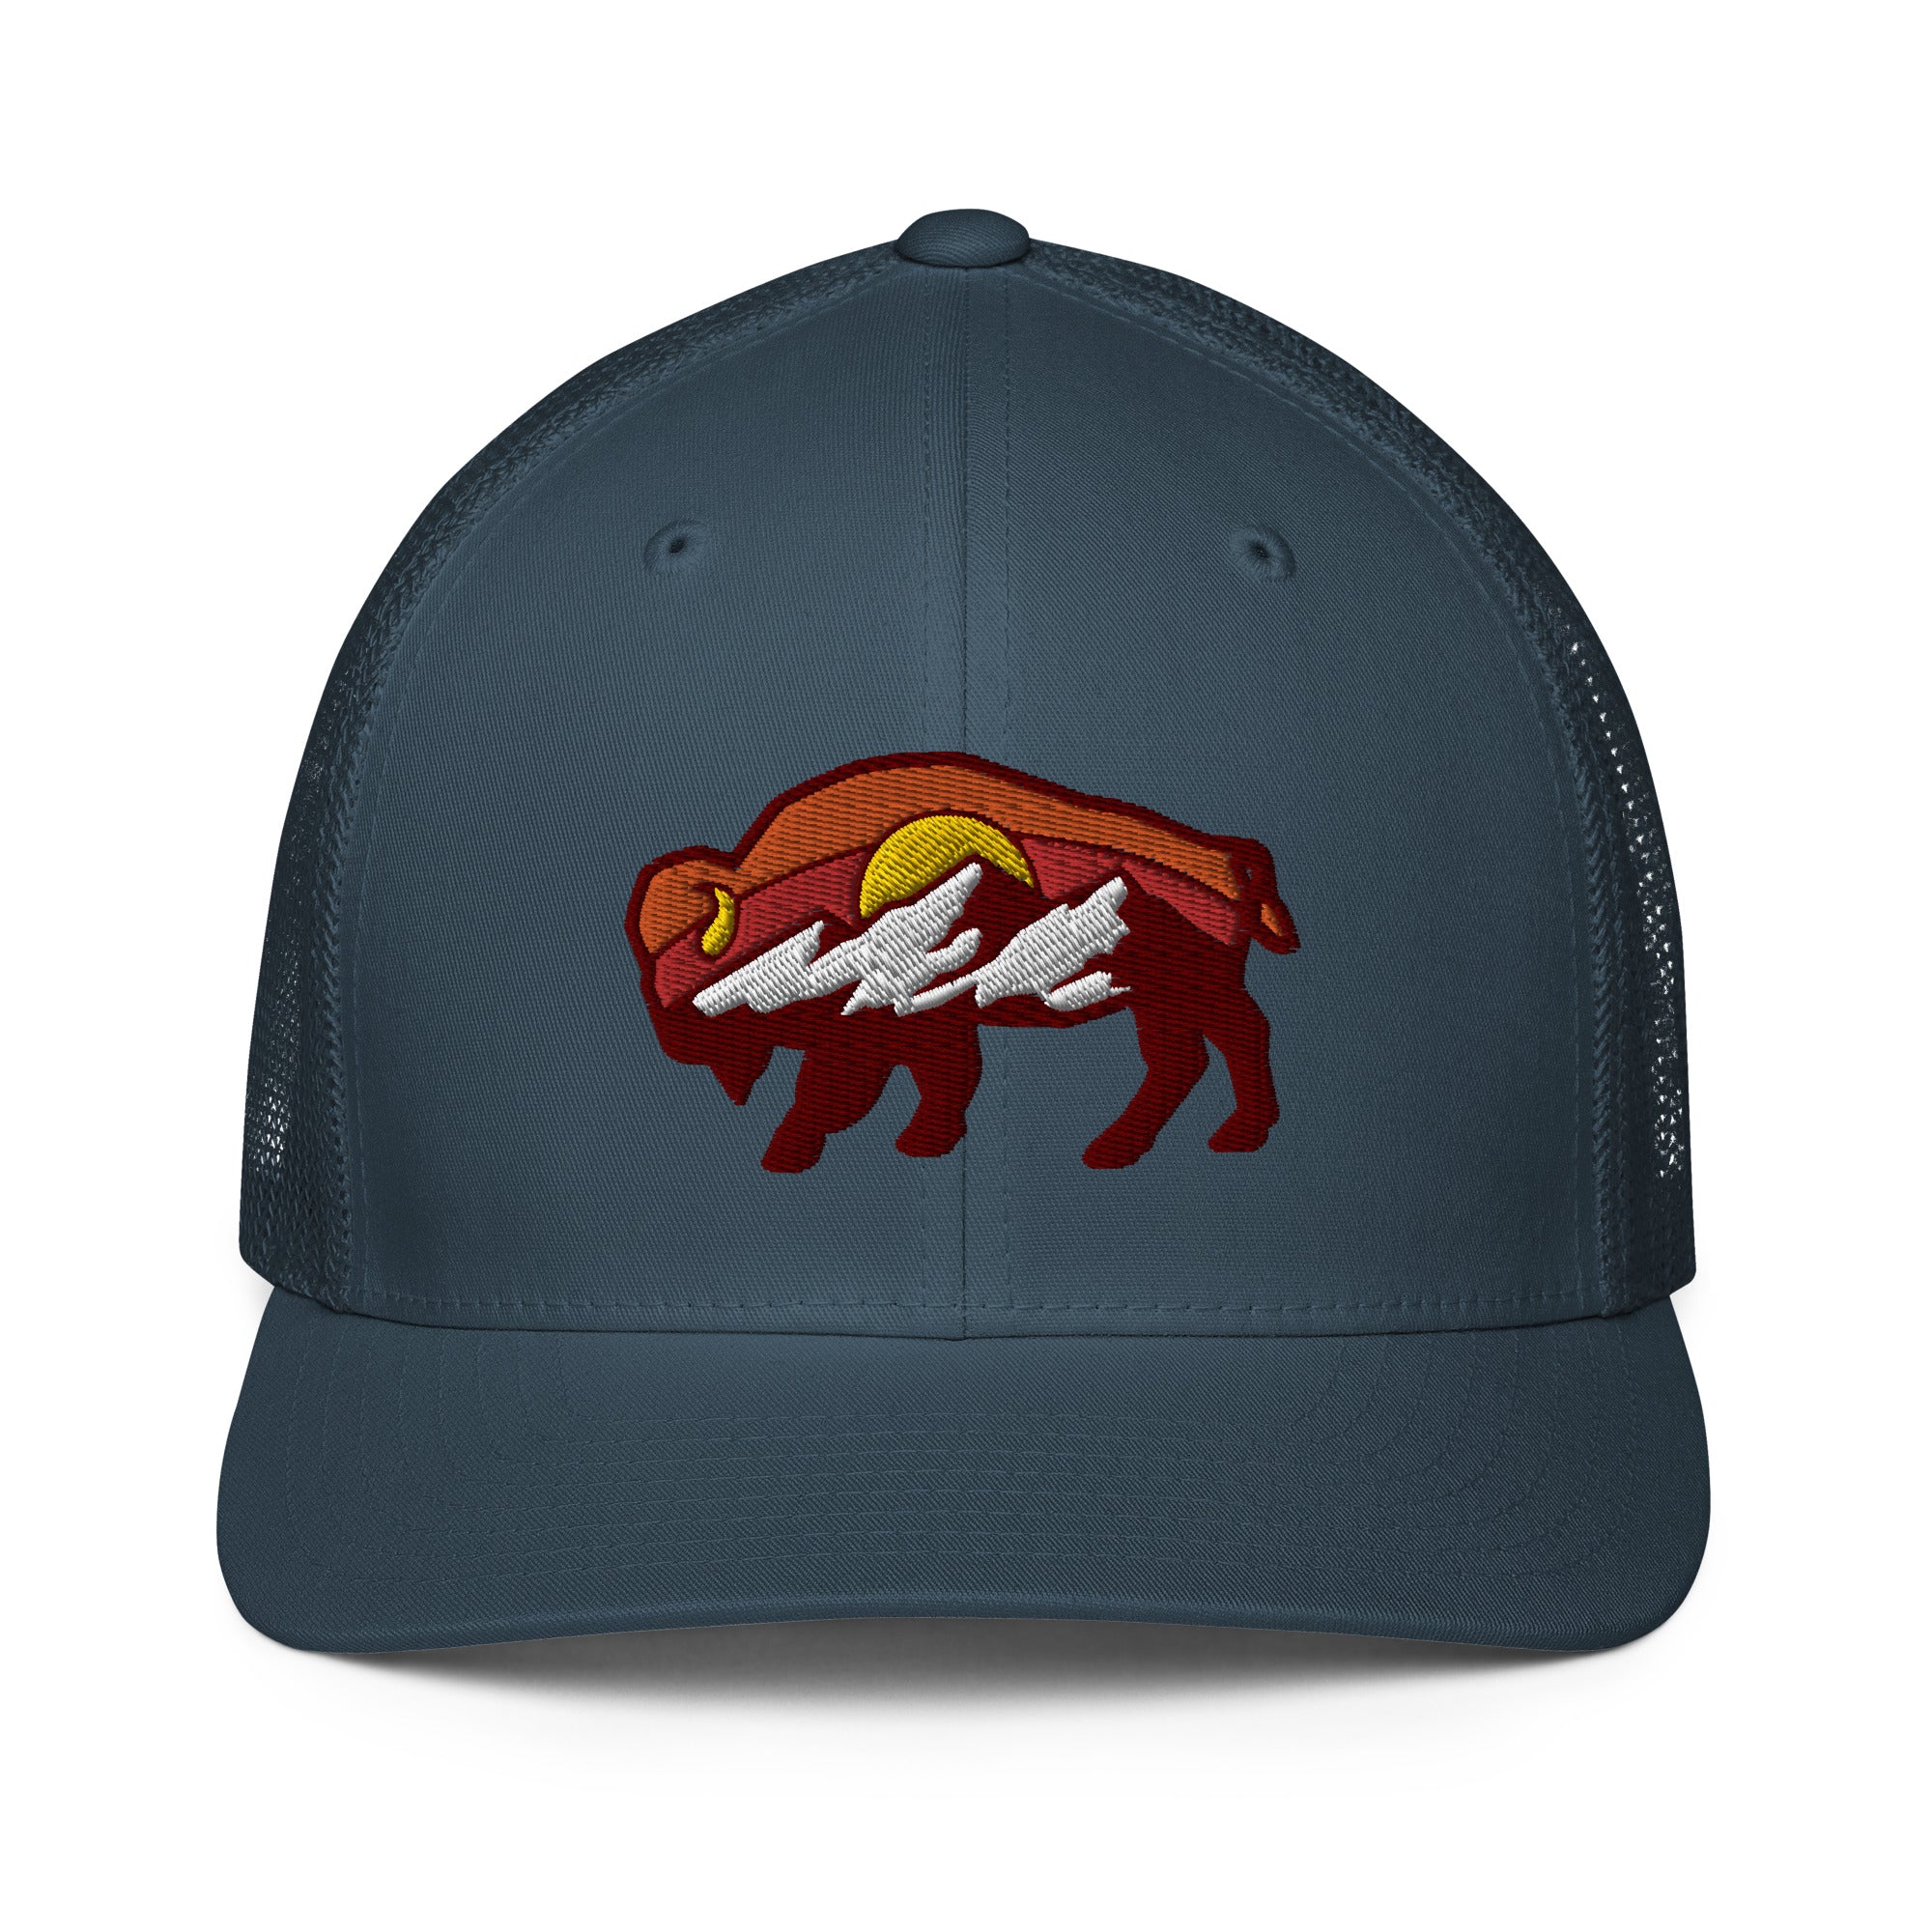 Liberty Bison Flexfit Trucker Hat